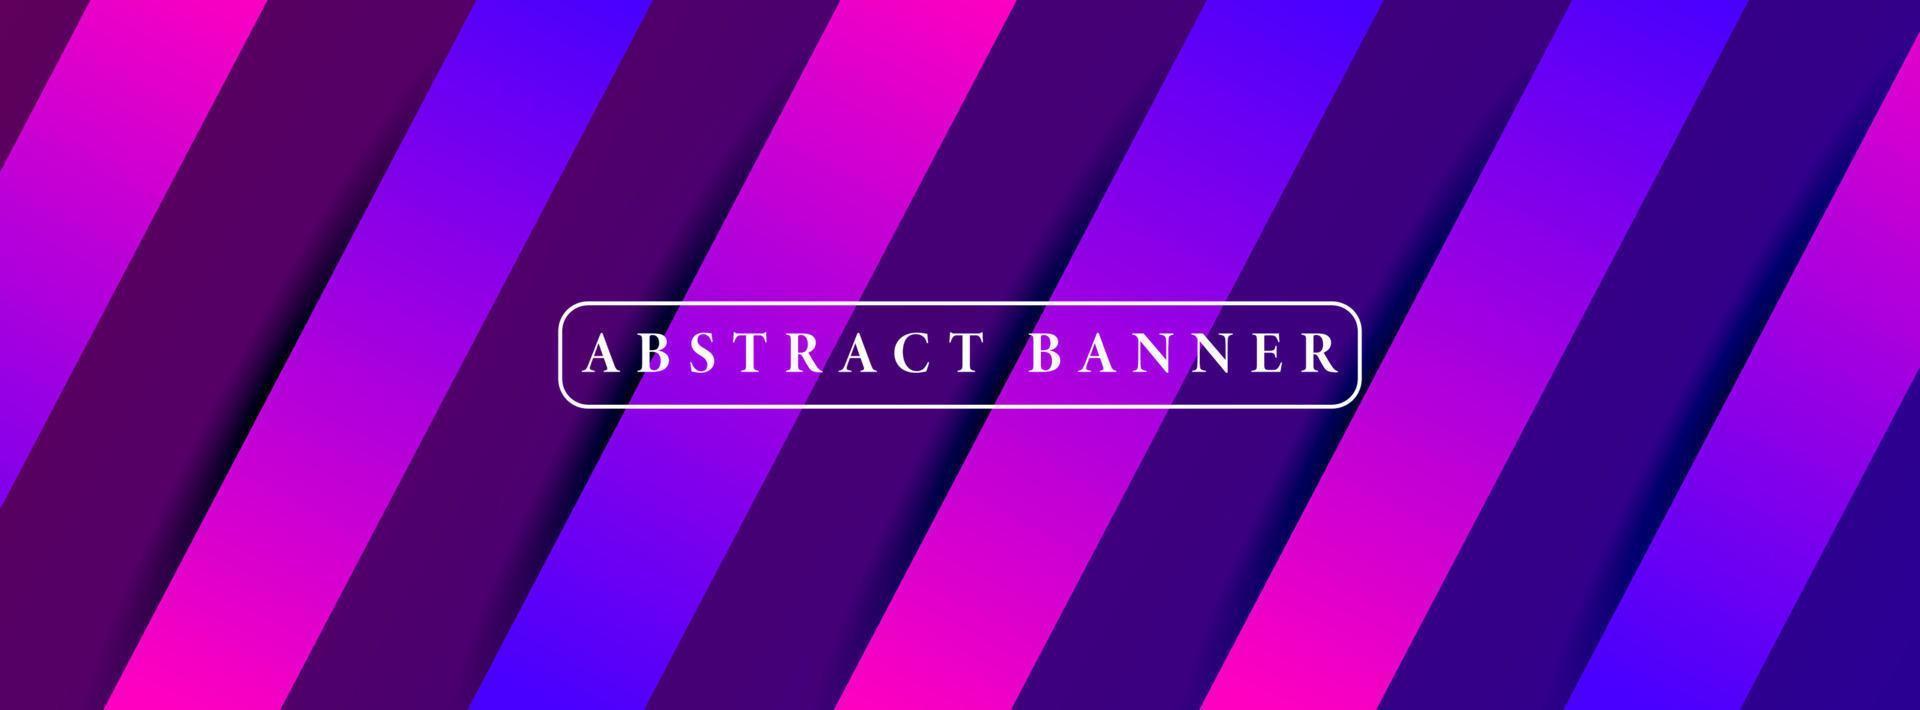 amplo banner abstrato criado com listras gradientes vetor